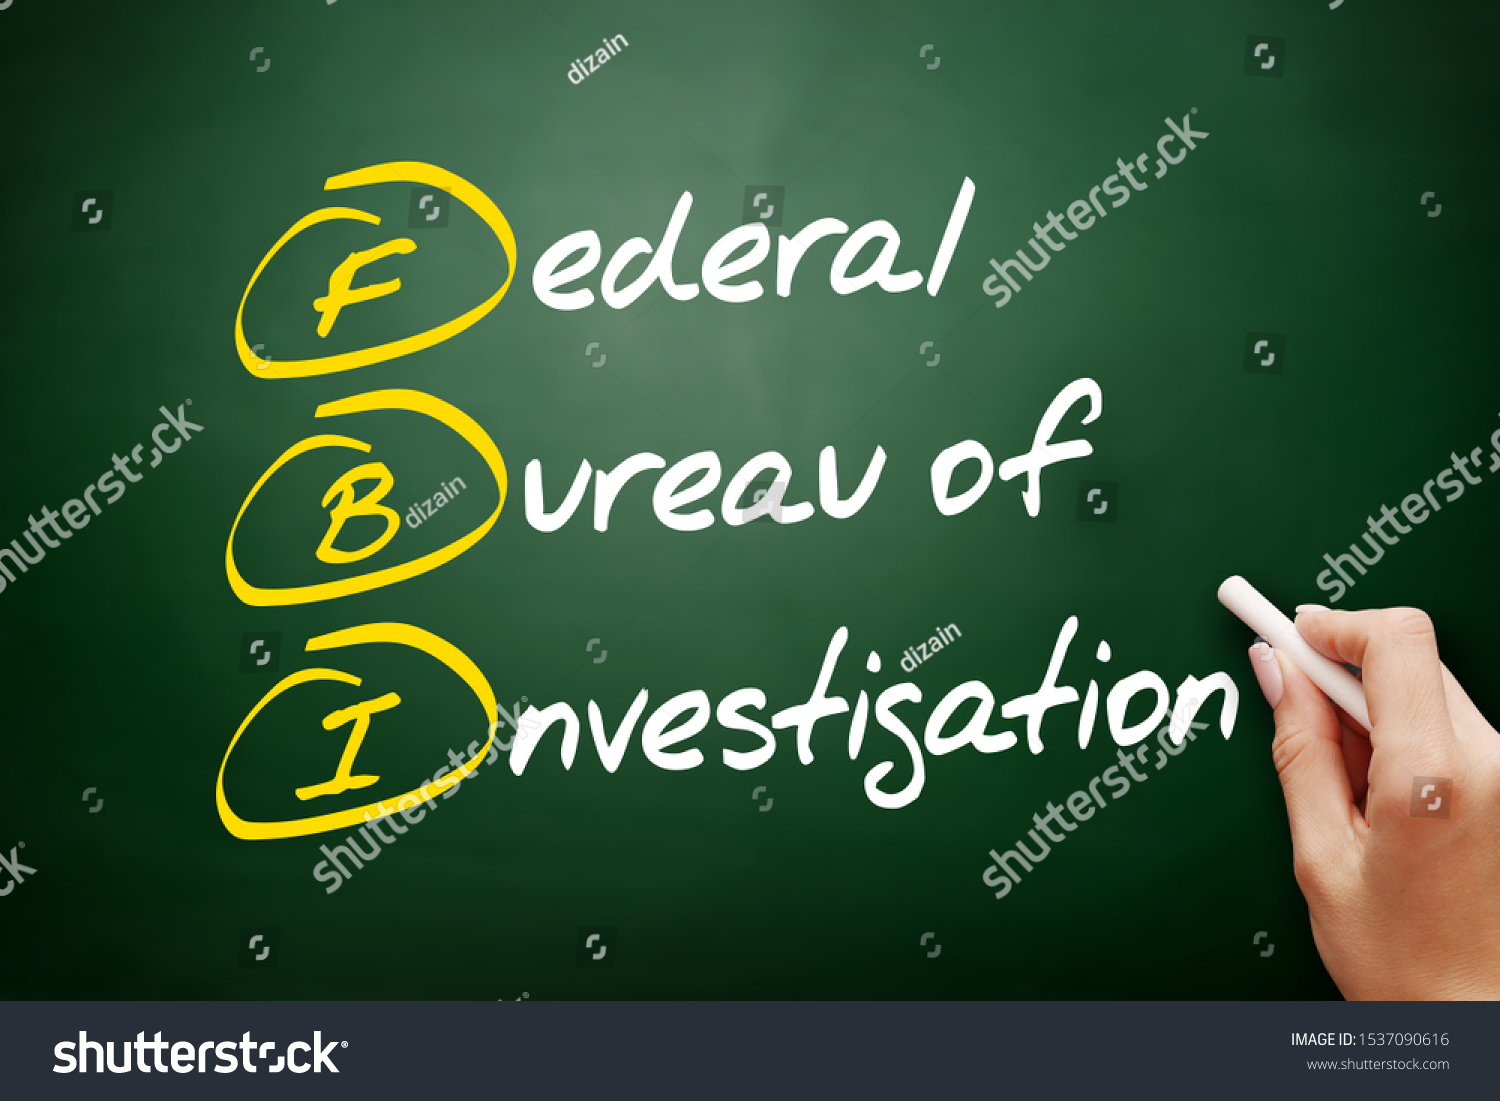 fbi-federal-bureau-investigation-acronym-concept-stock-photo-1537090616